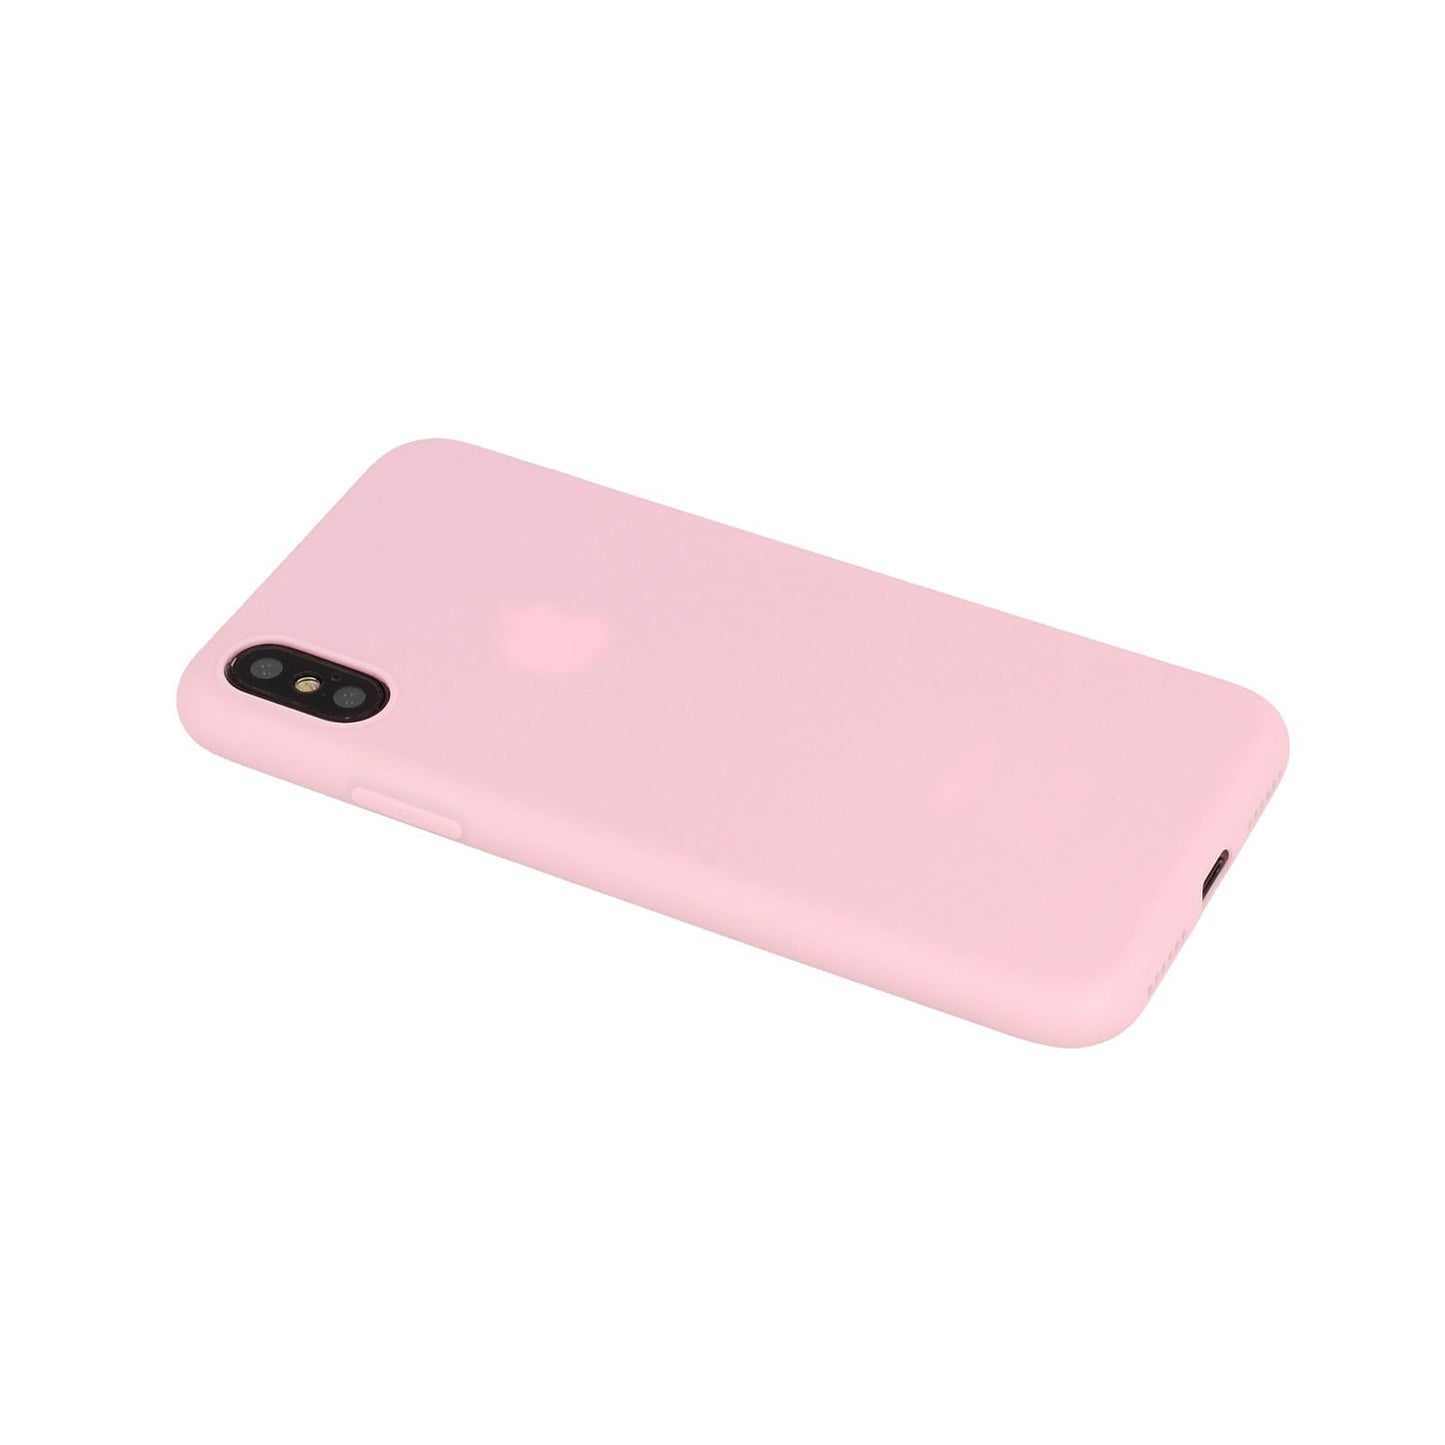 Hülle für Apple iPhone X/Xs Handyhülle Silikon Tasche Case Cover Rosa